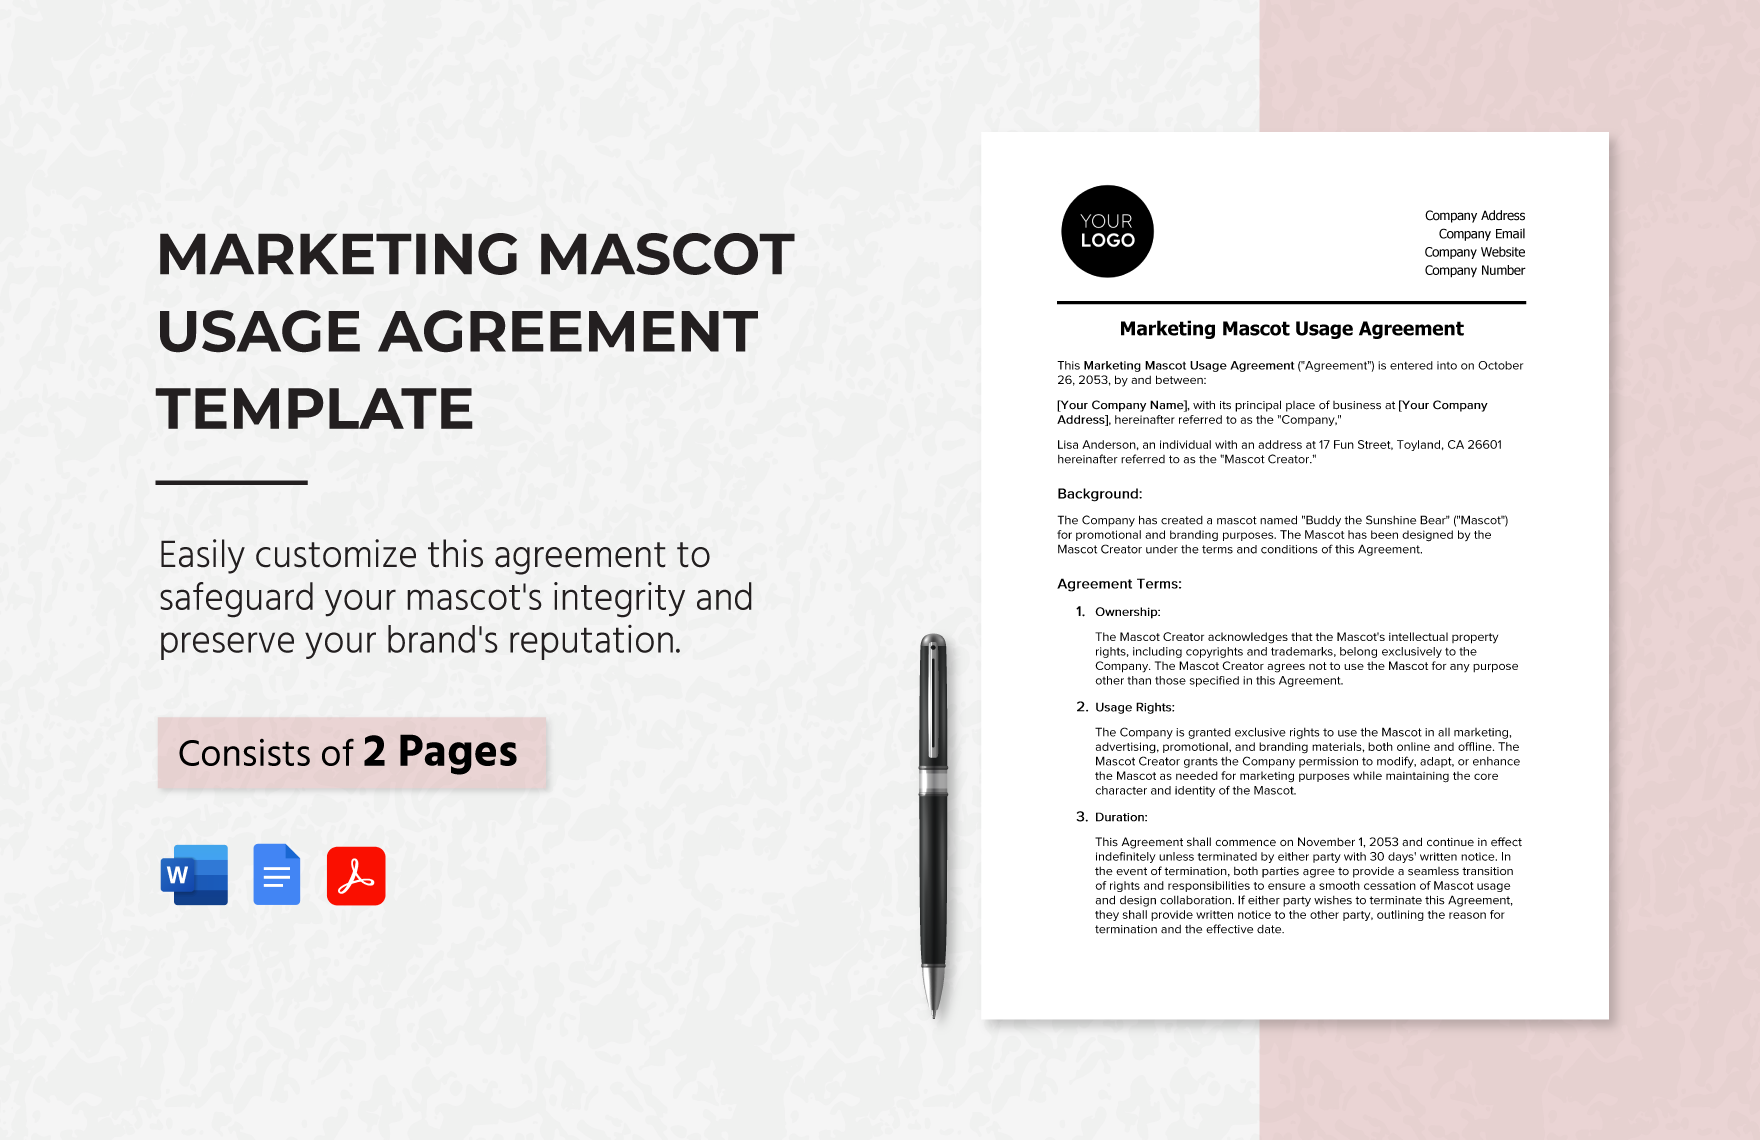 Marketing Mascot Usage Agreement Template in Word, Google Docs, PDF